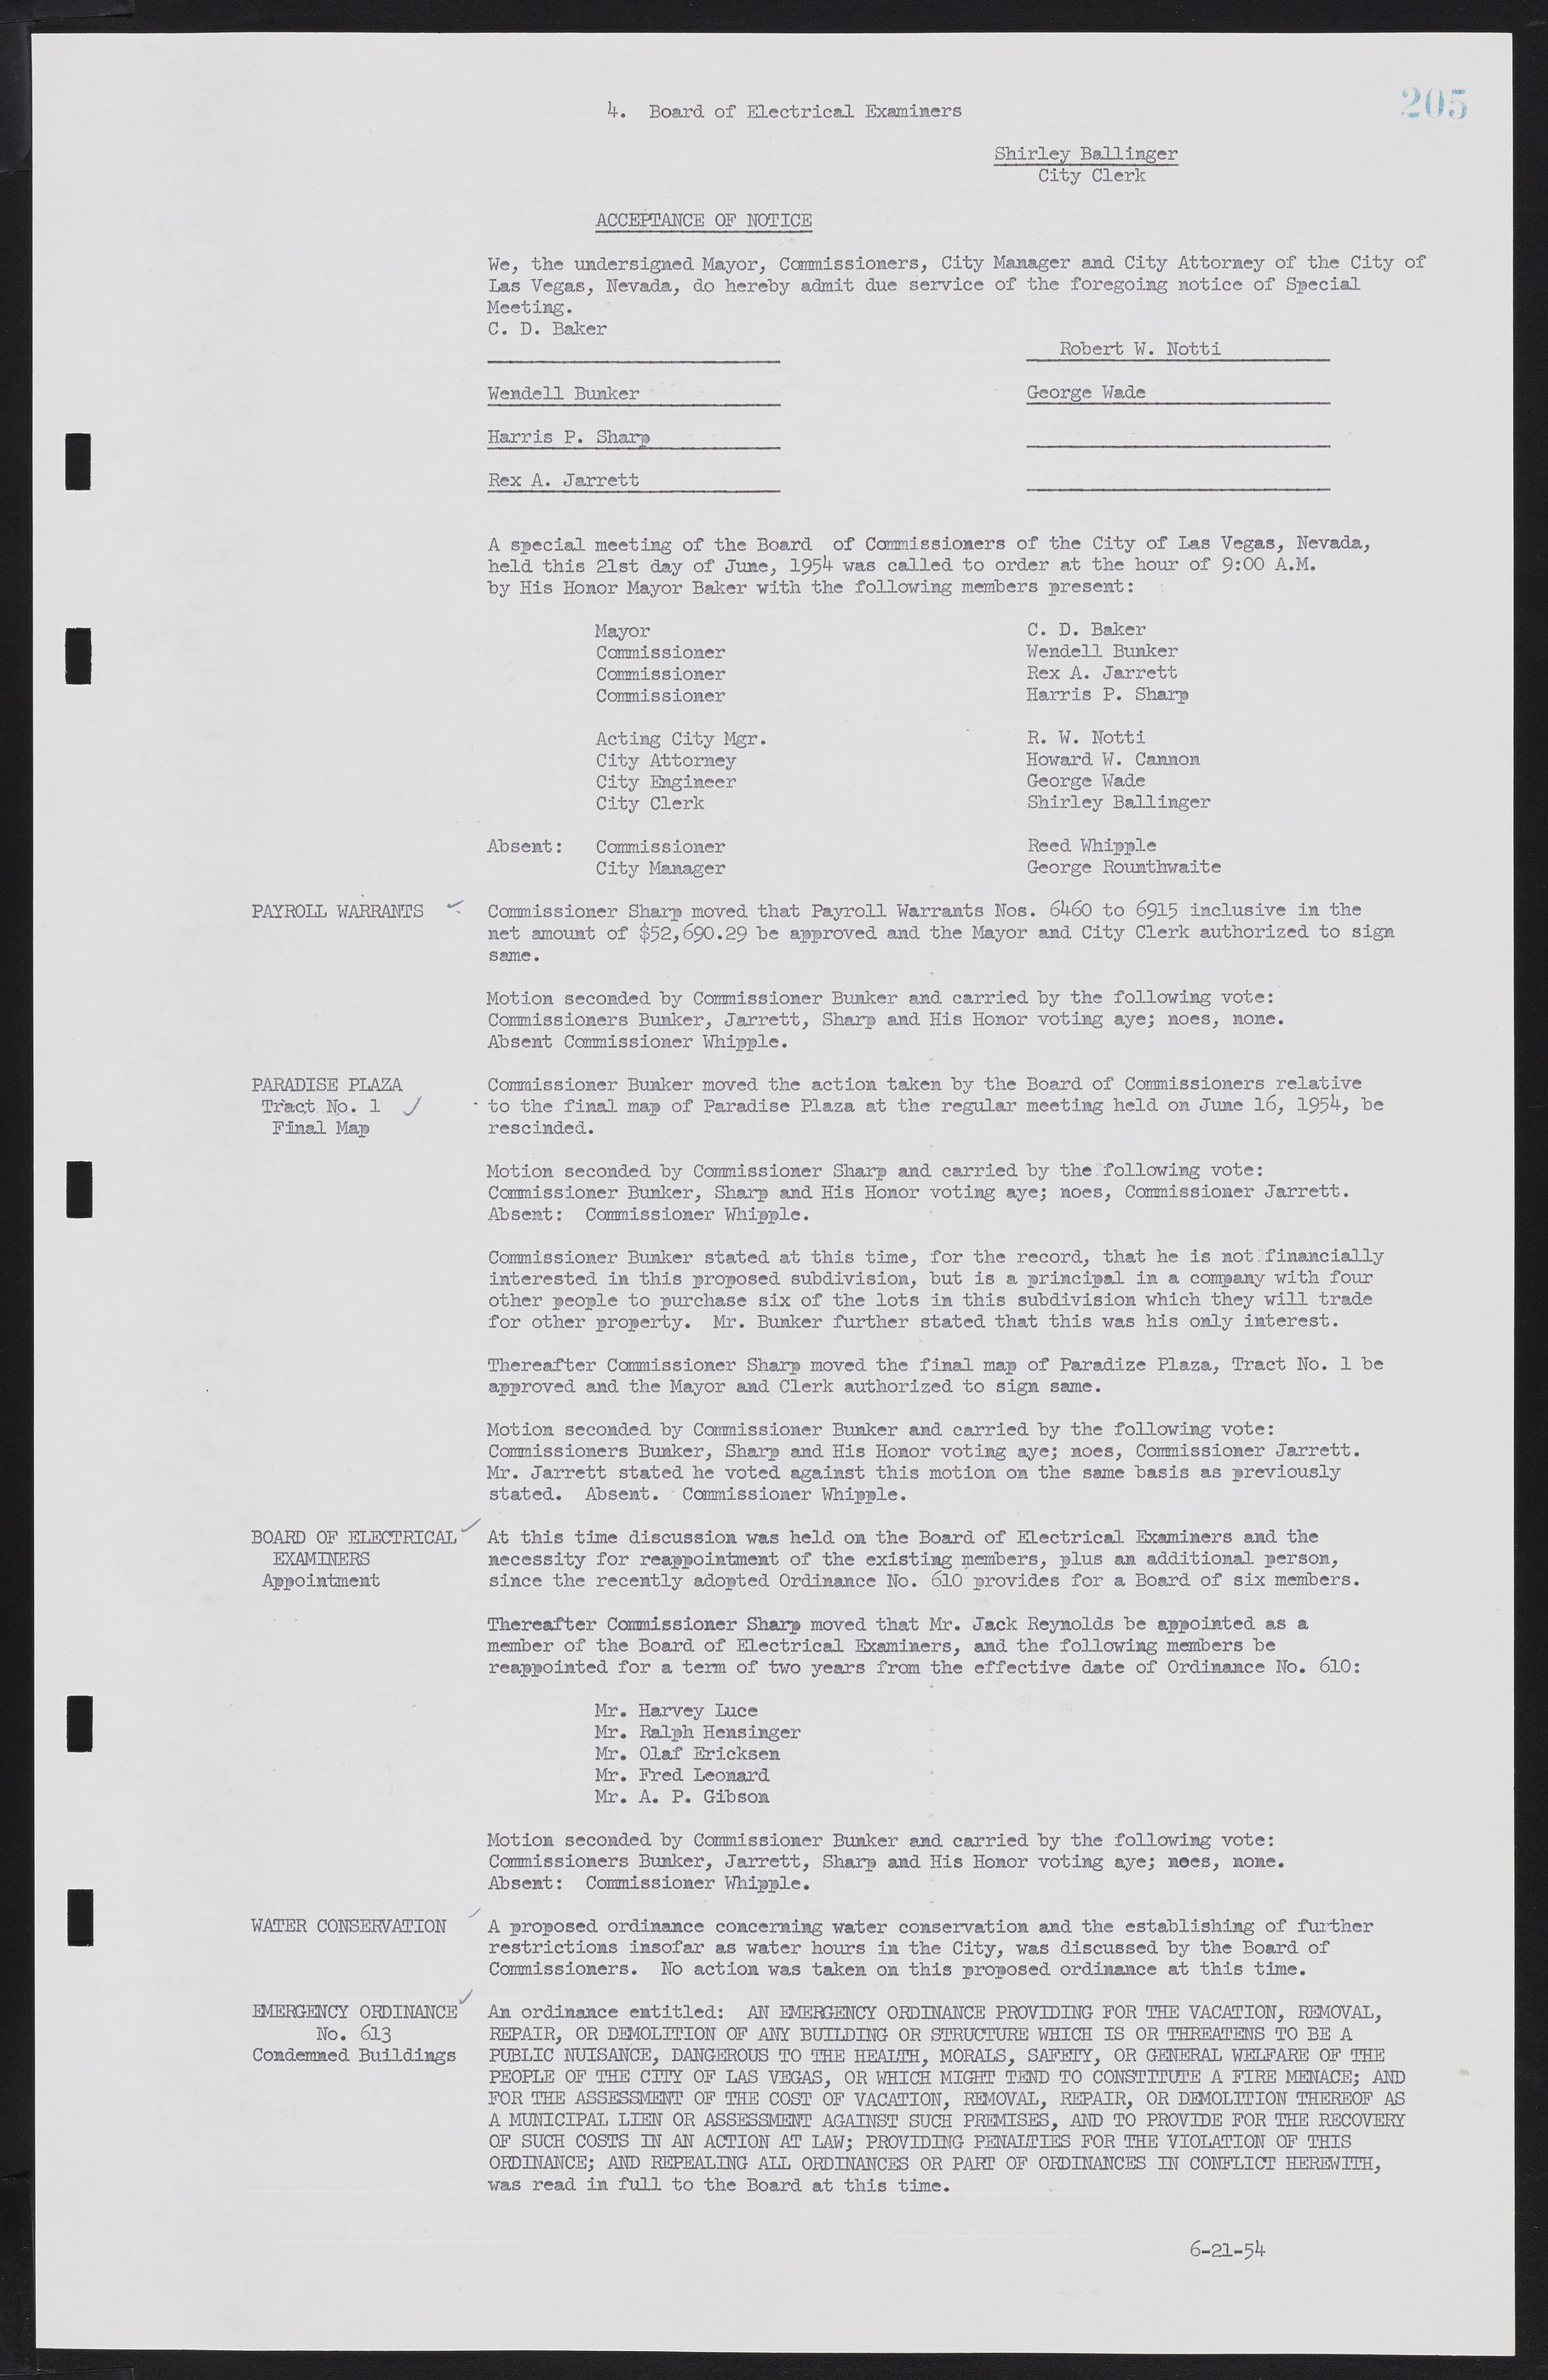 Las Vegas City Commission Minutes, February 17, 1954 to September 21, 1955, lvc000009-211